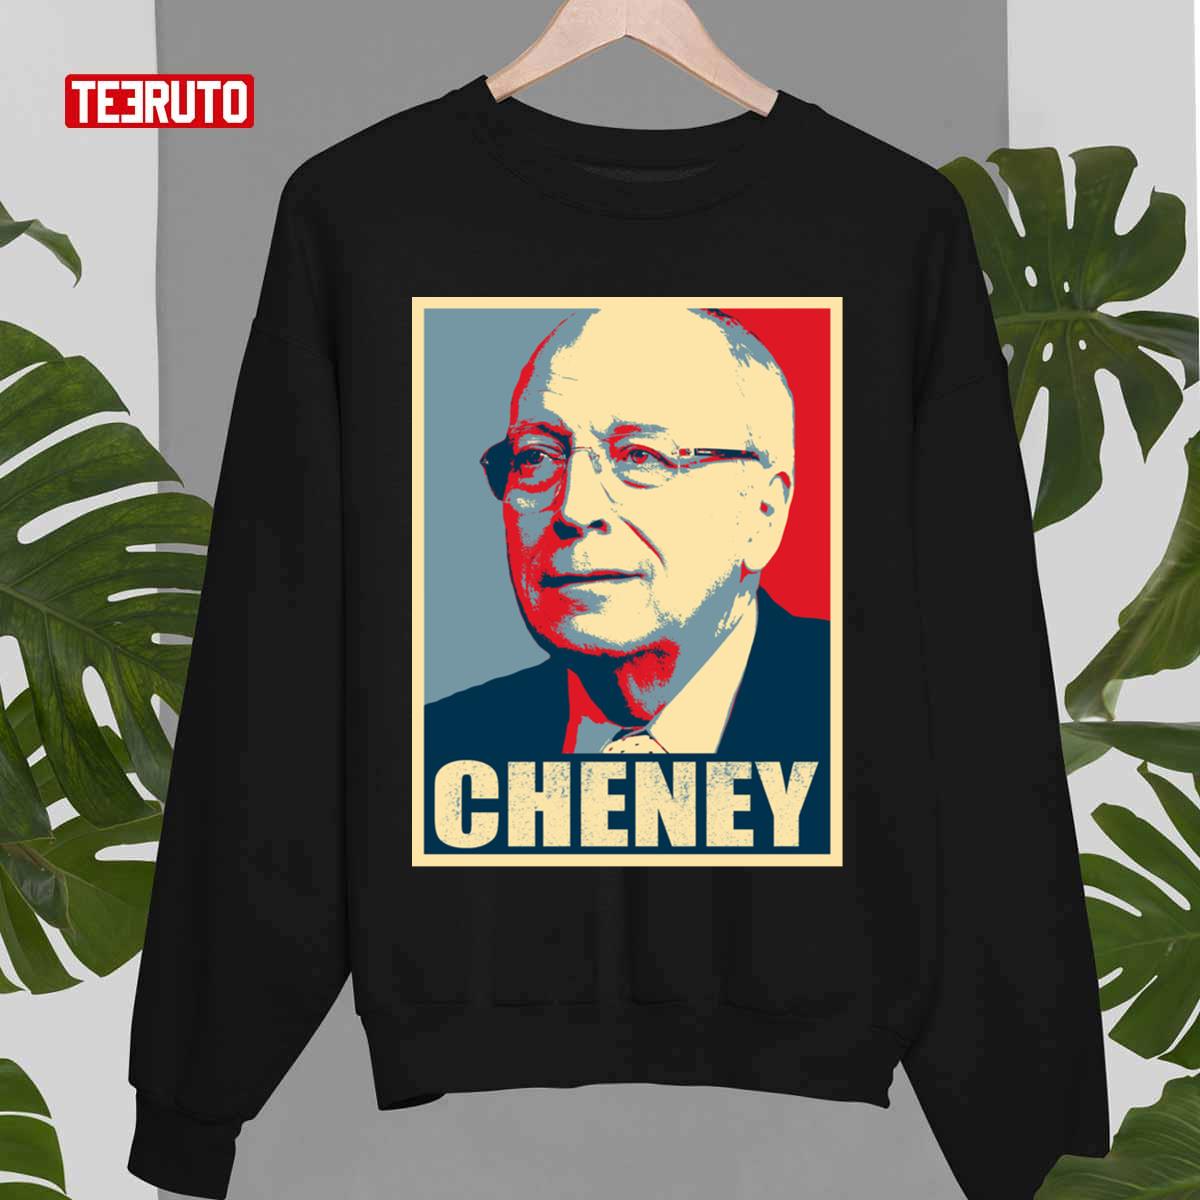 Vice President Dick Cheney Hope Unisex T-Shirt